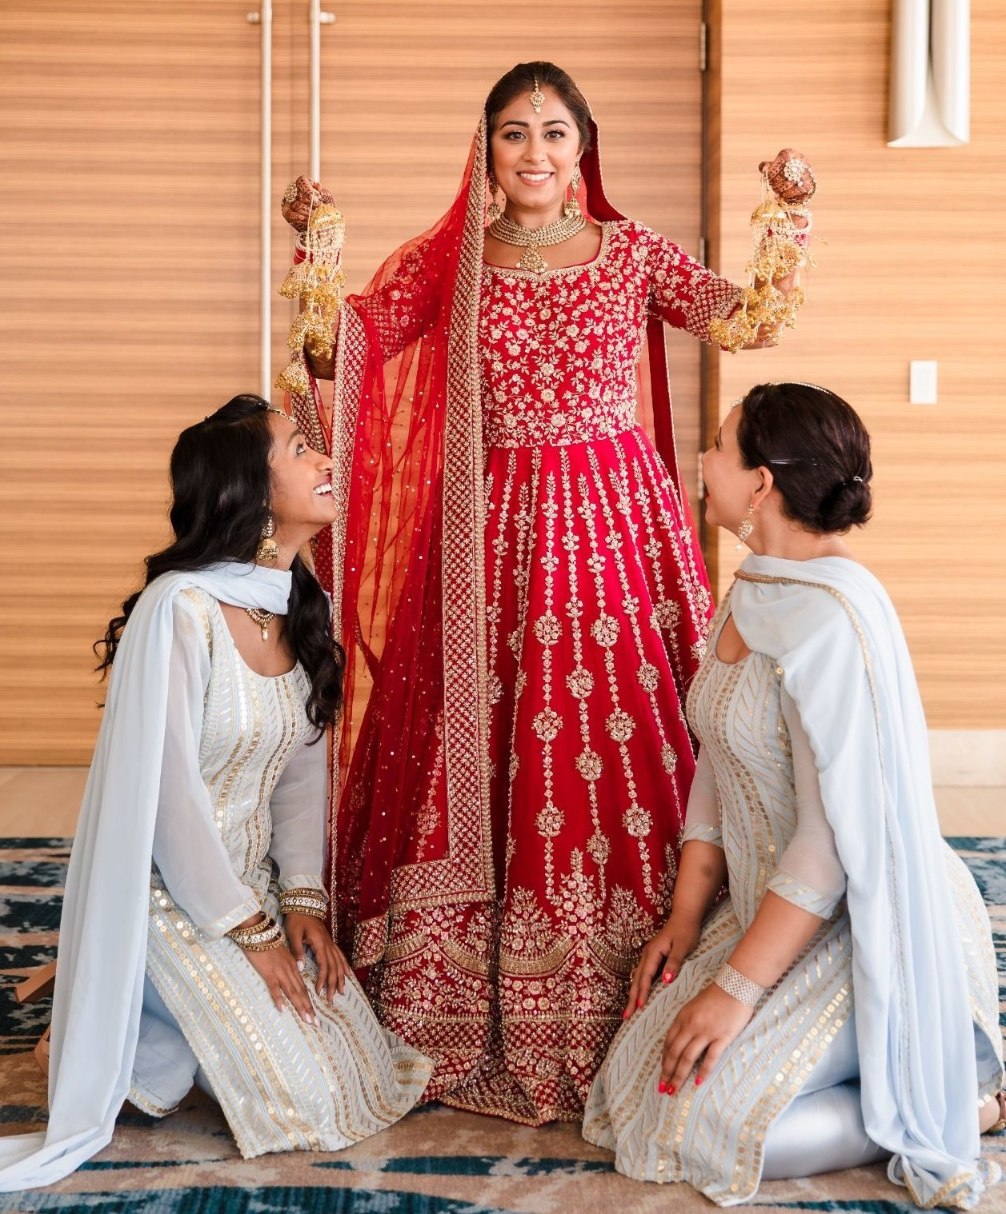 Punjabi Wedding Dress for Bride - The Dreamy Red Lehenga